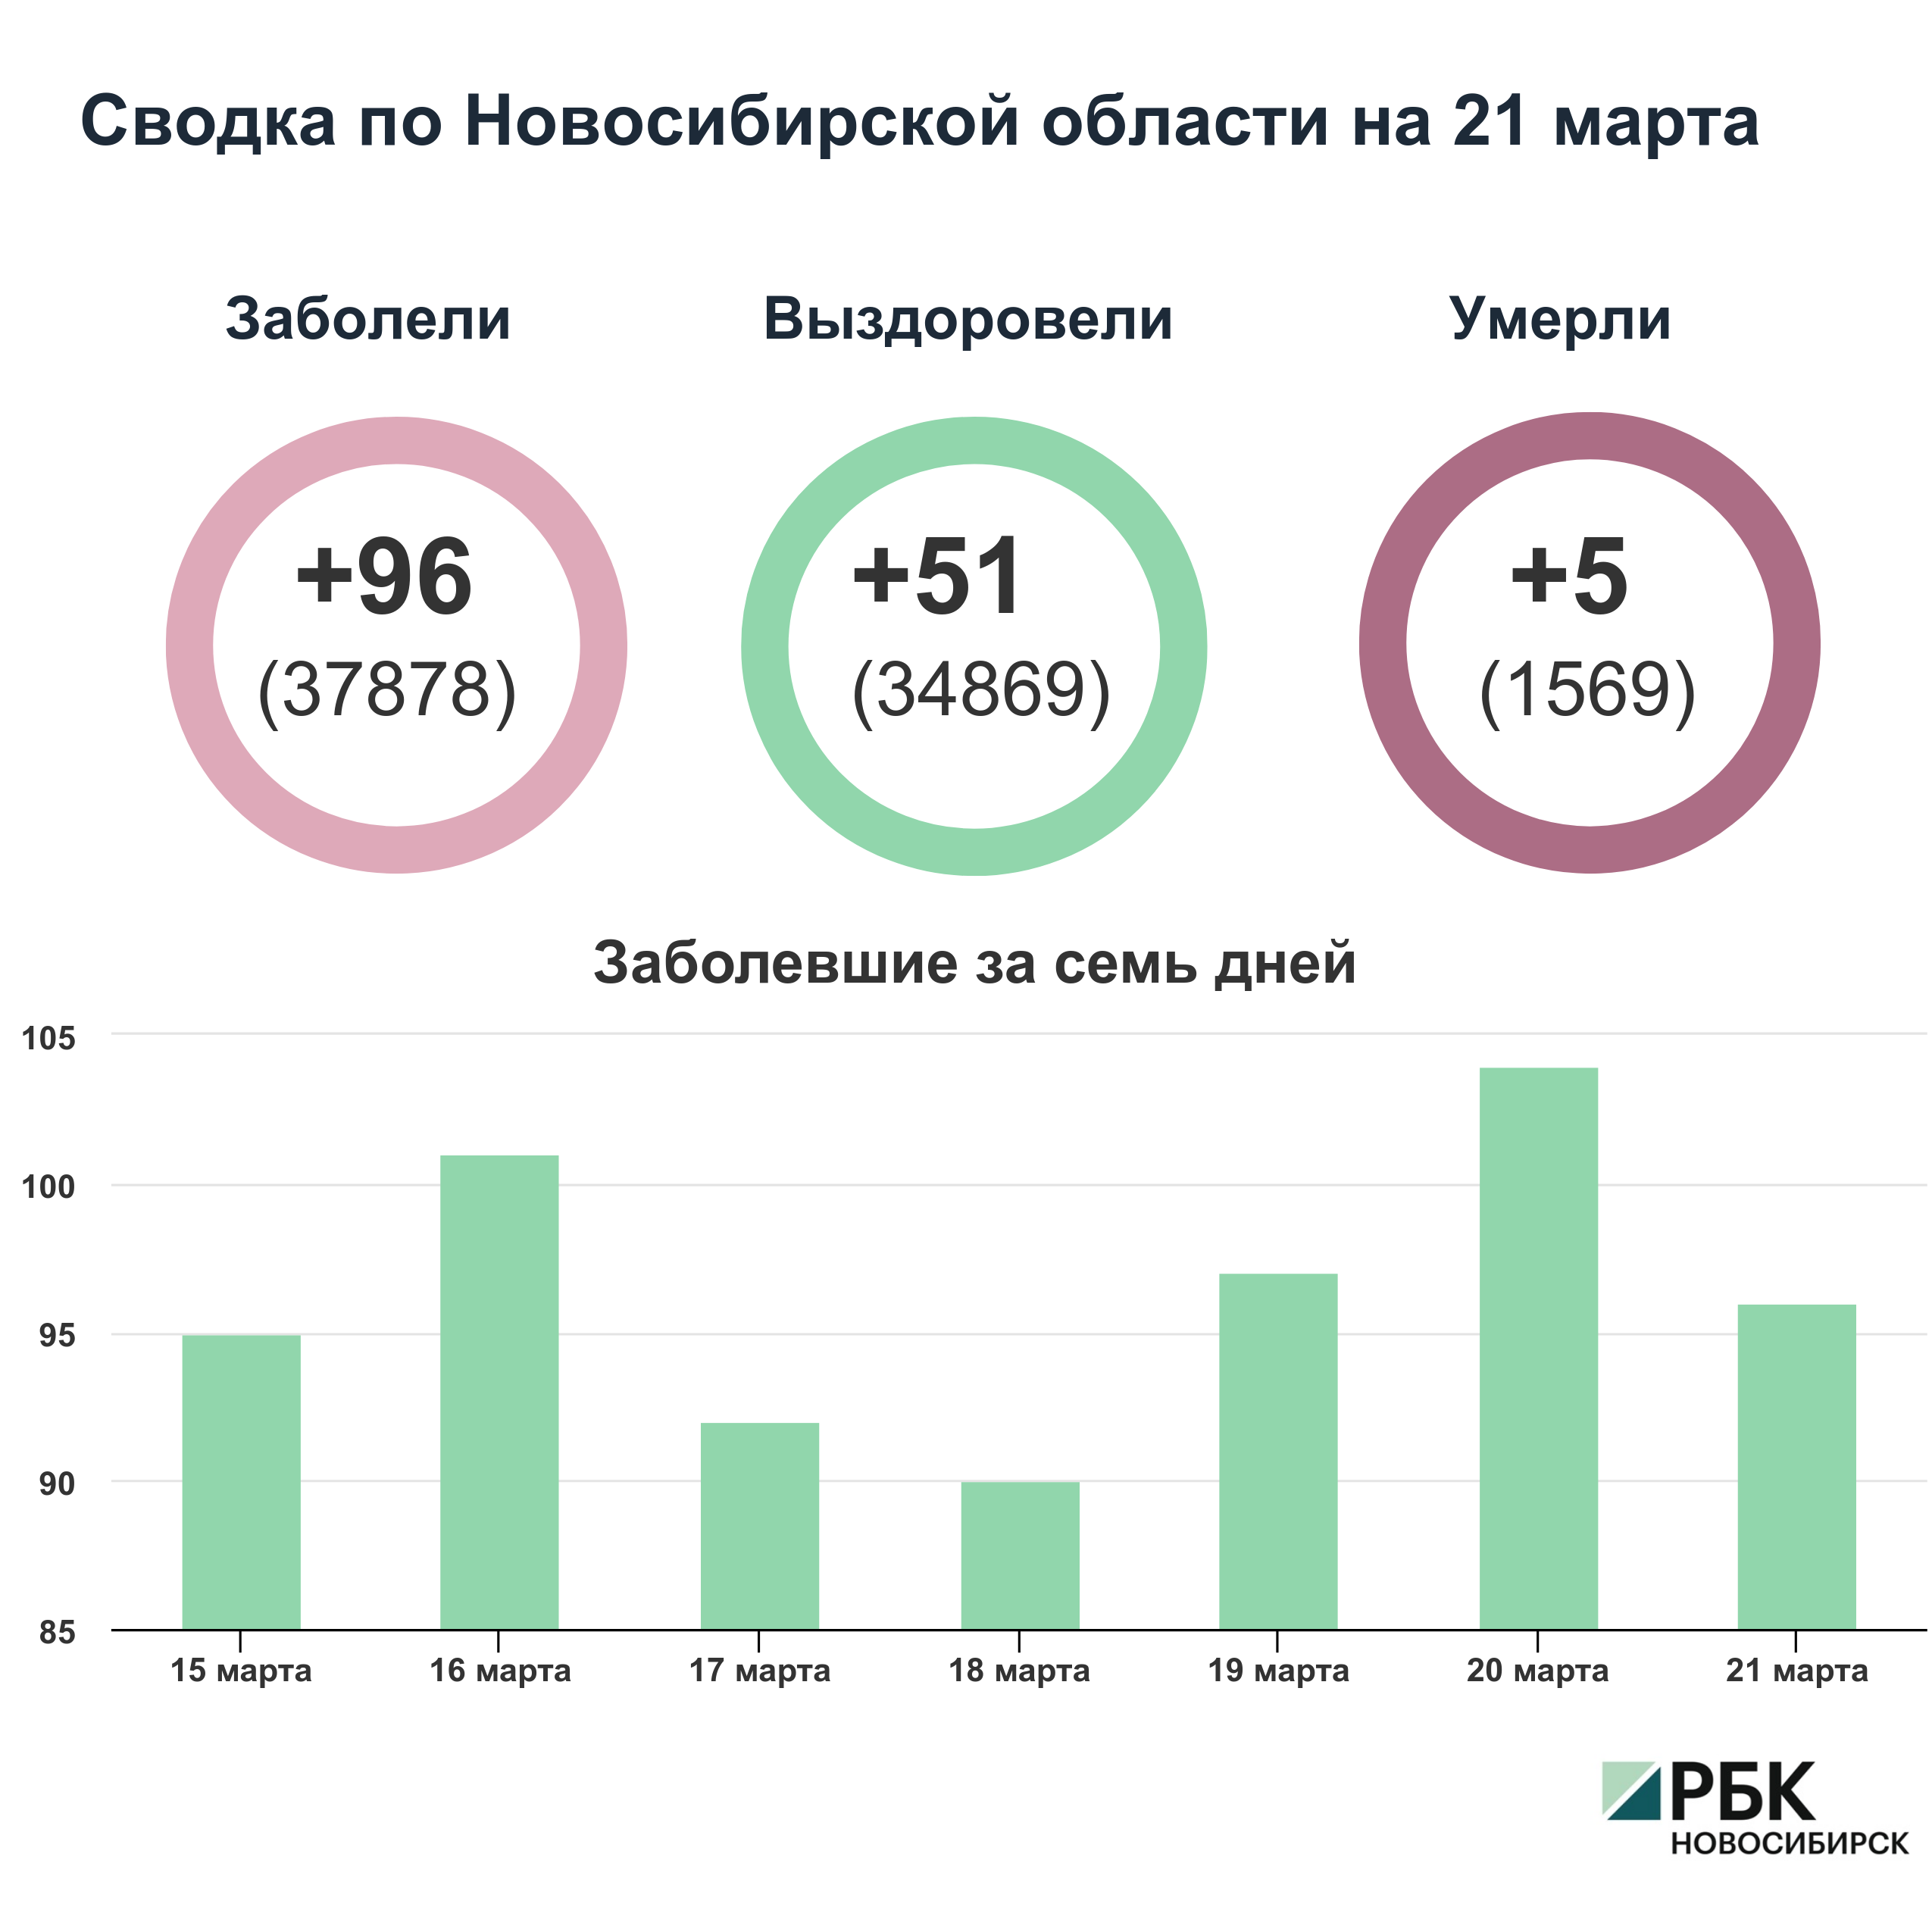 Коронавирус в Новосибирске: сводка на 21 марта